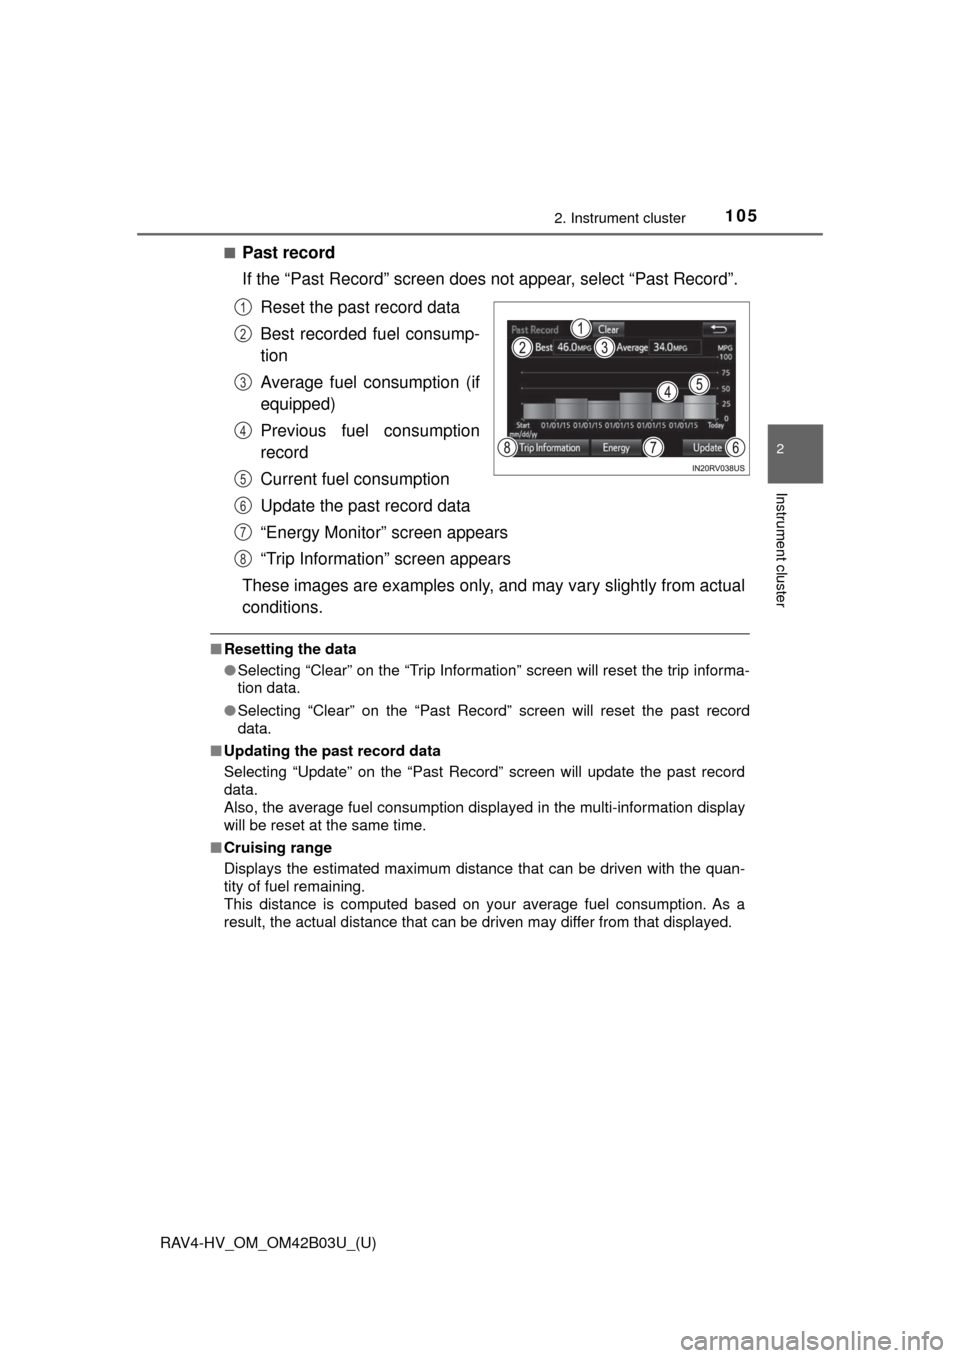 TOYOTA RAV4 HYBRID 2017 XA40 / 4.G Owners Manual RAV4-HV_OM_OM42B03U_(U)
1052. Instrument cluster
2
Instrument cluster
■Past record
If the “Past Record” screen does not appear, select “Past Record”.
Reset the past record data
Best recorded